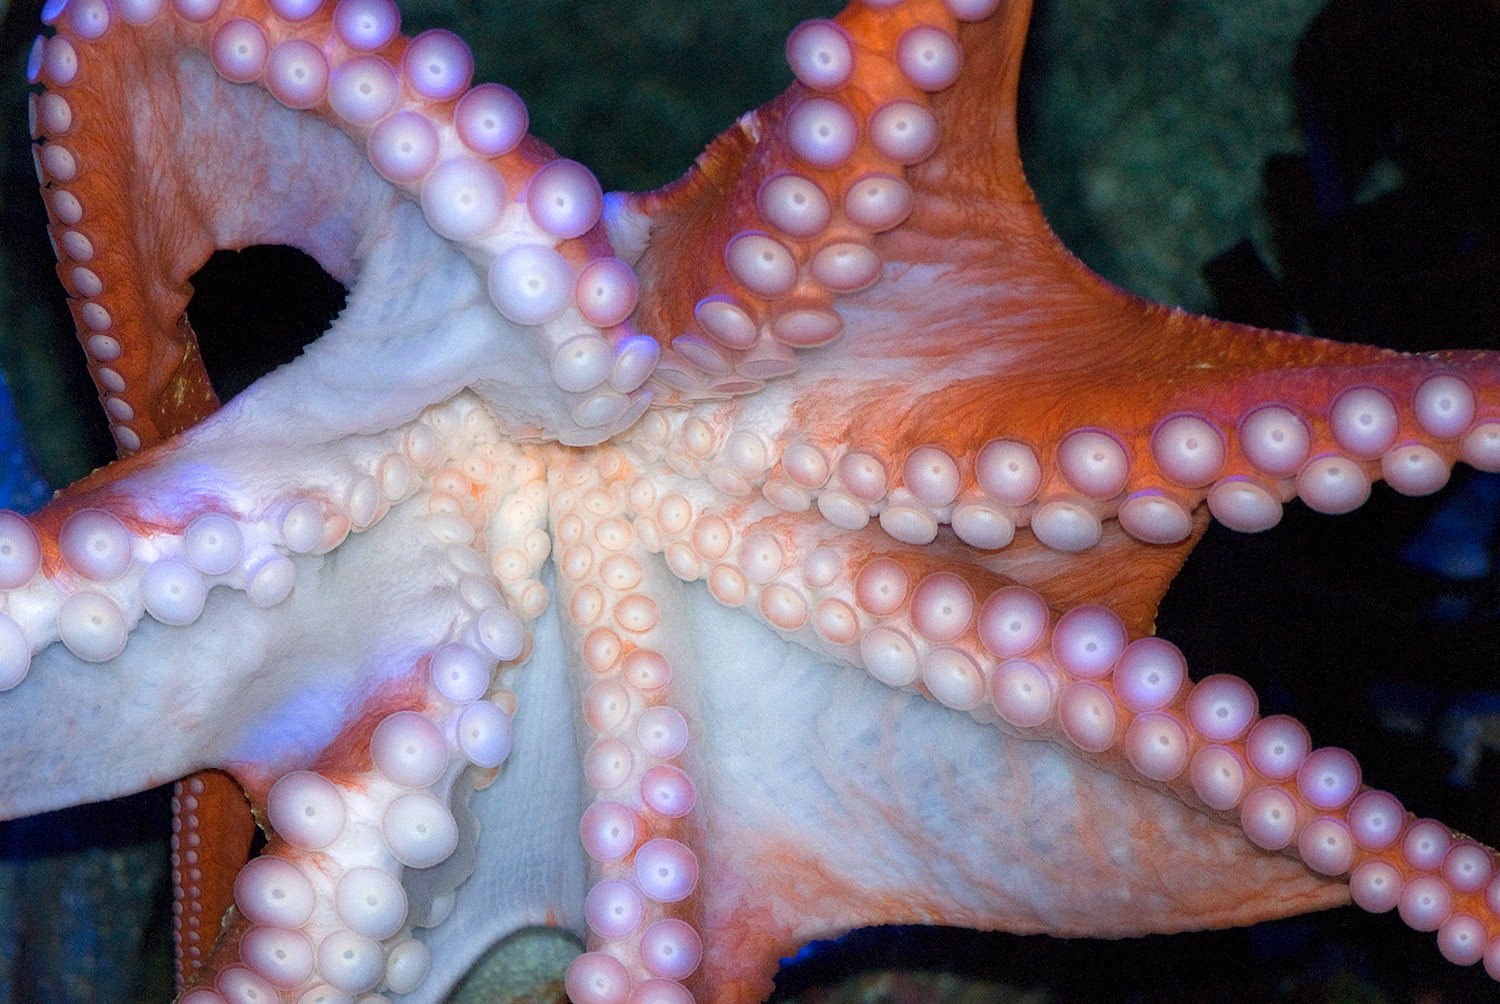 octopus-photo-image-020.jpg